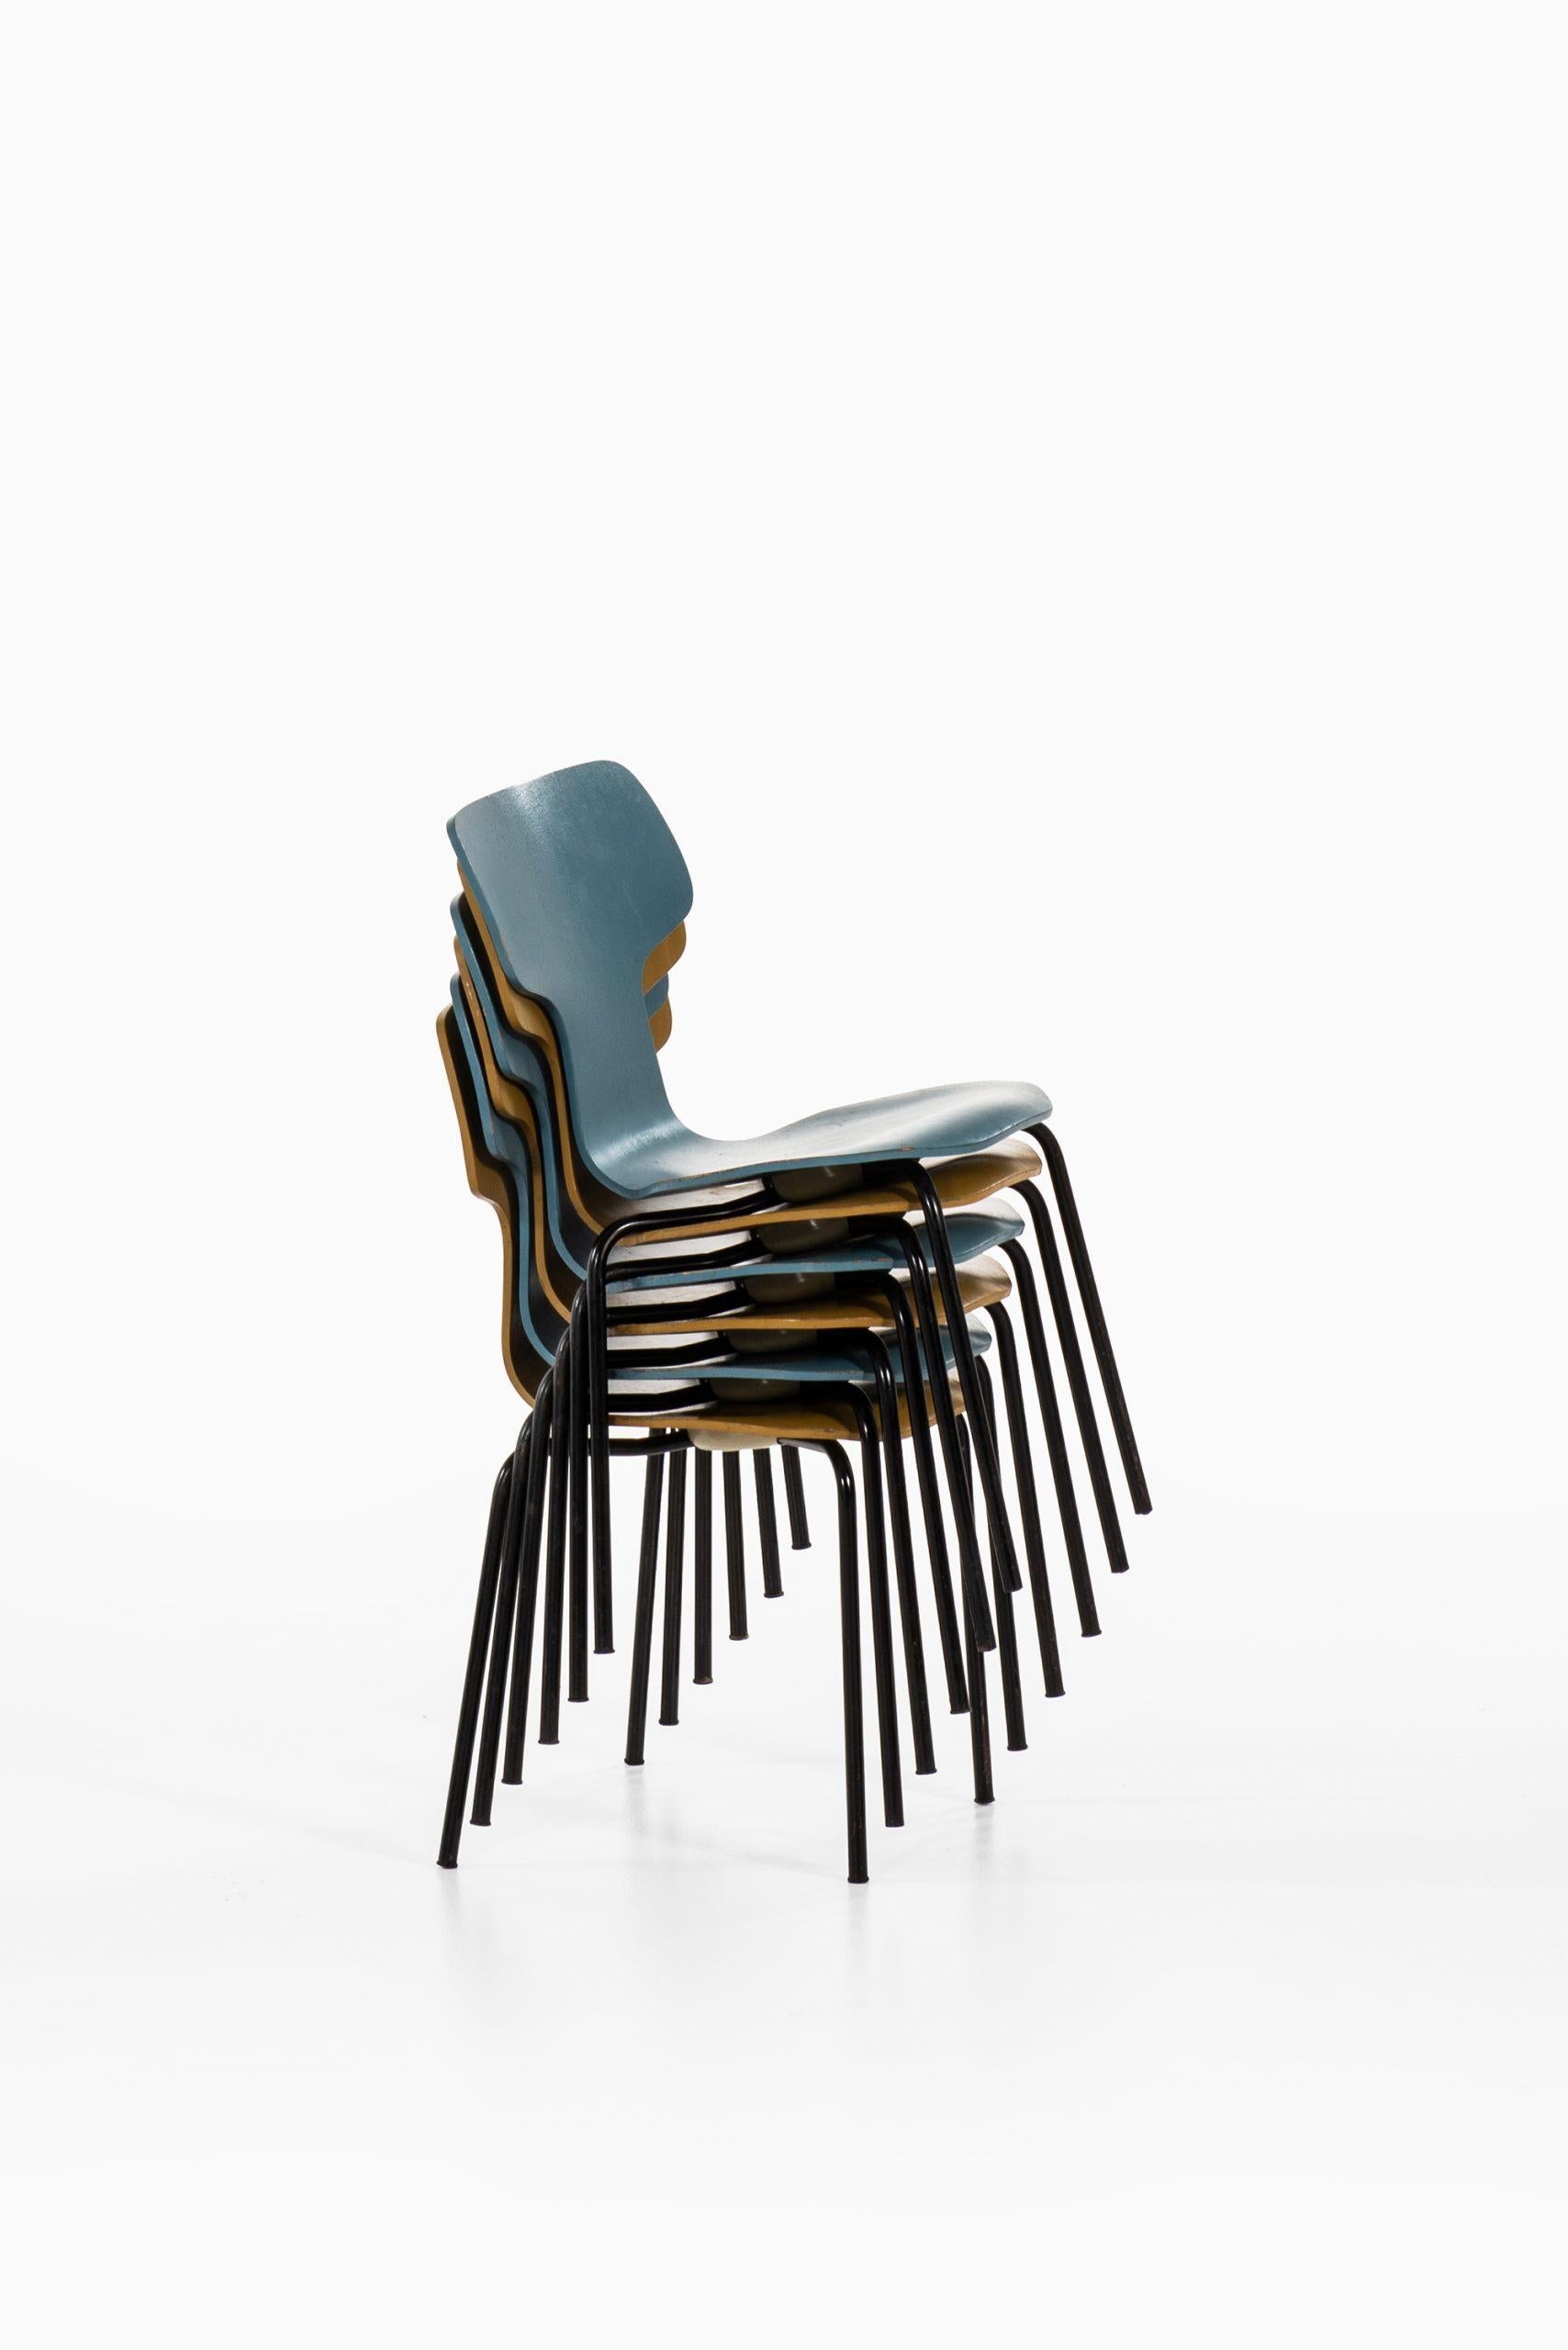 Set of 6 children T-chairs designed by Arne Jacobsen. Produced by Fritz Hansen in Denmark.